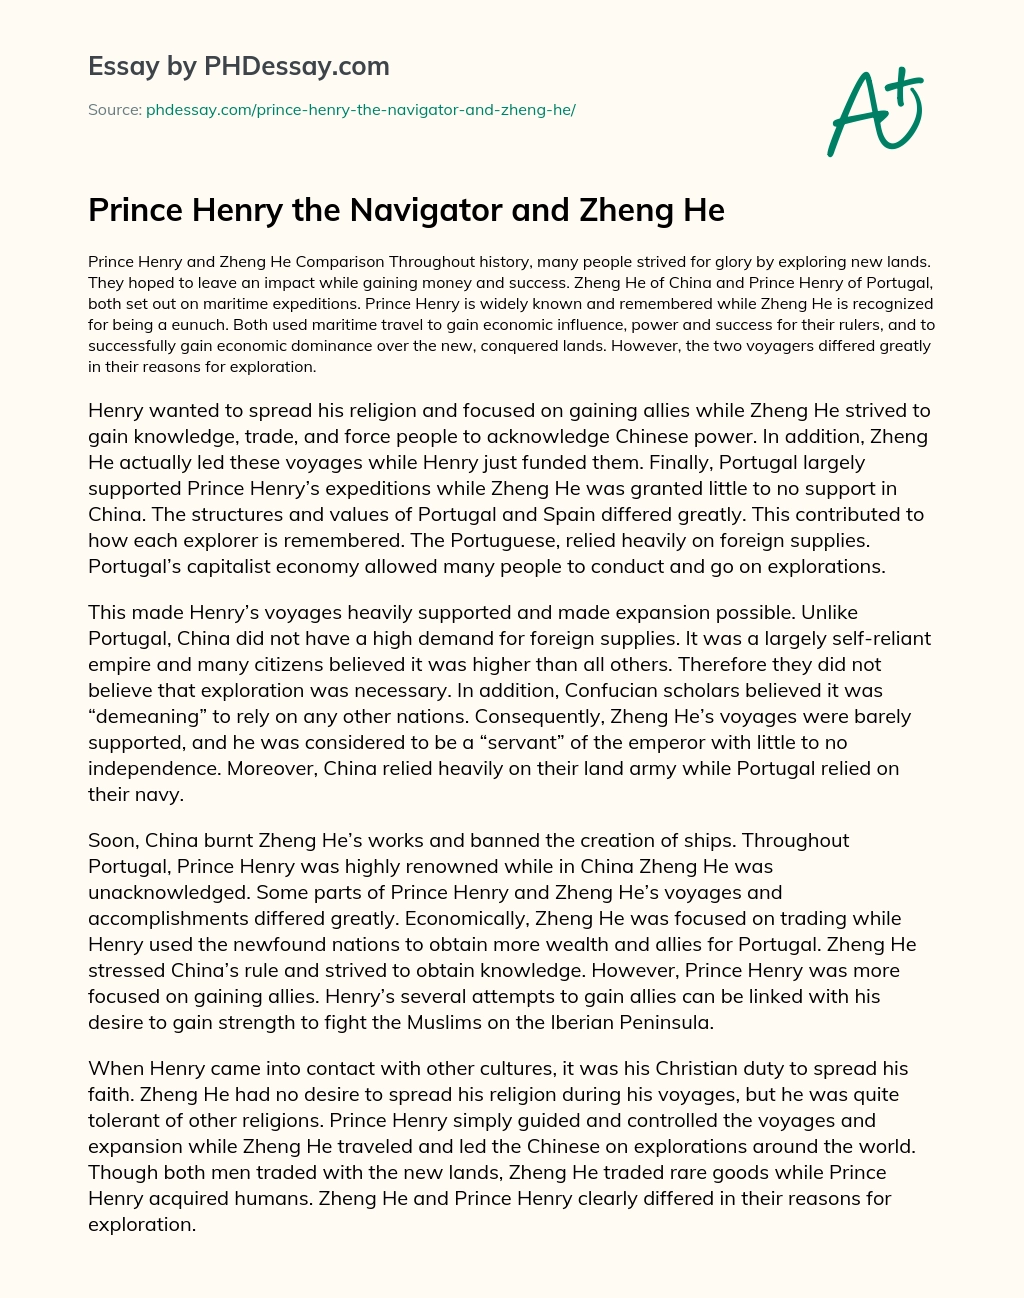 Prince Henry the Navigator and Zheng He essay